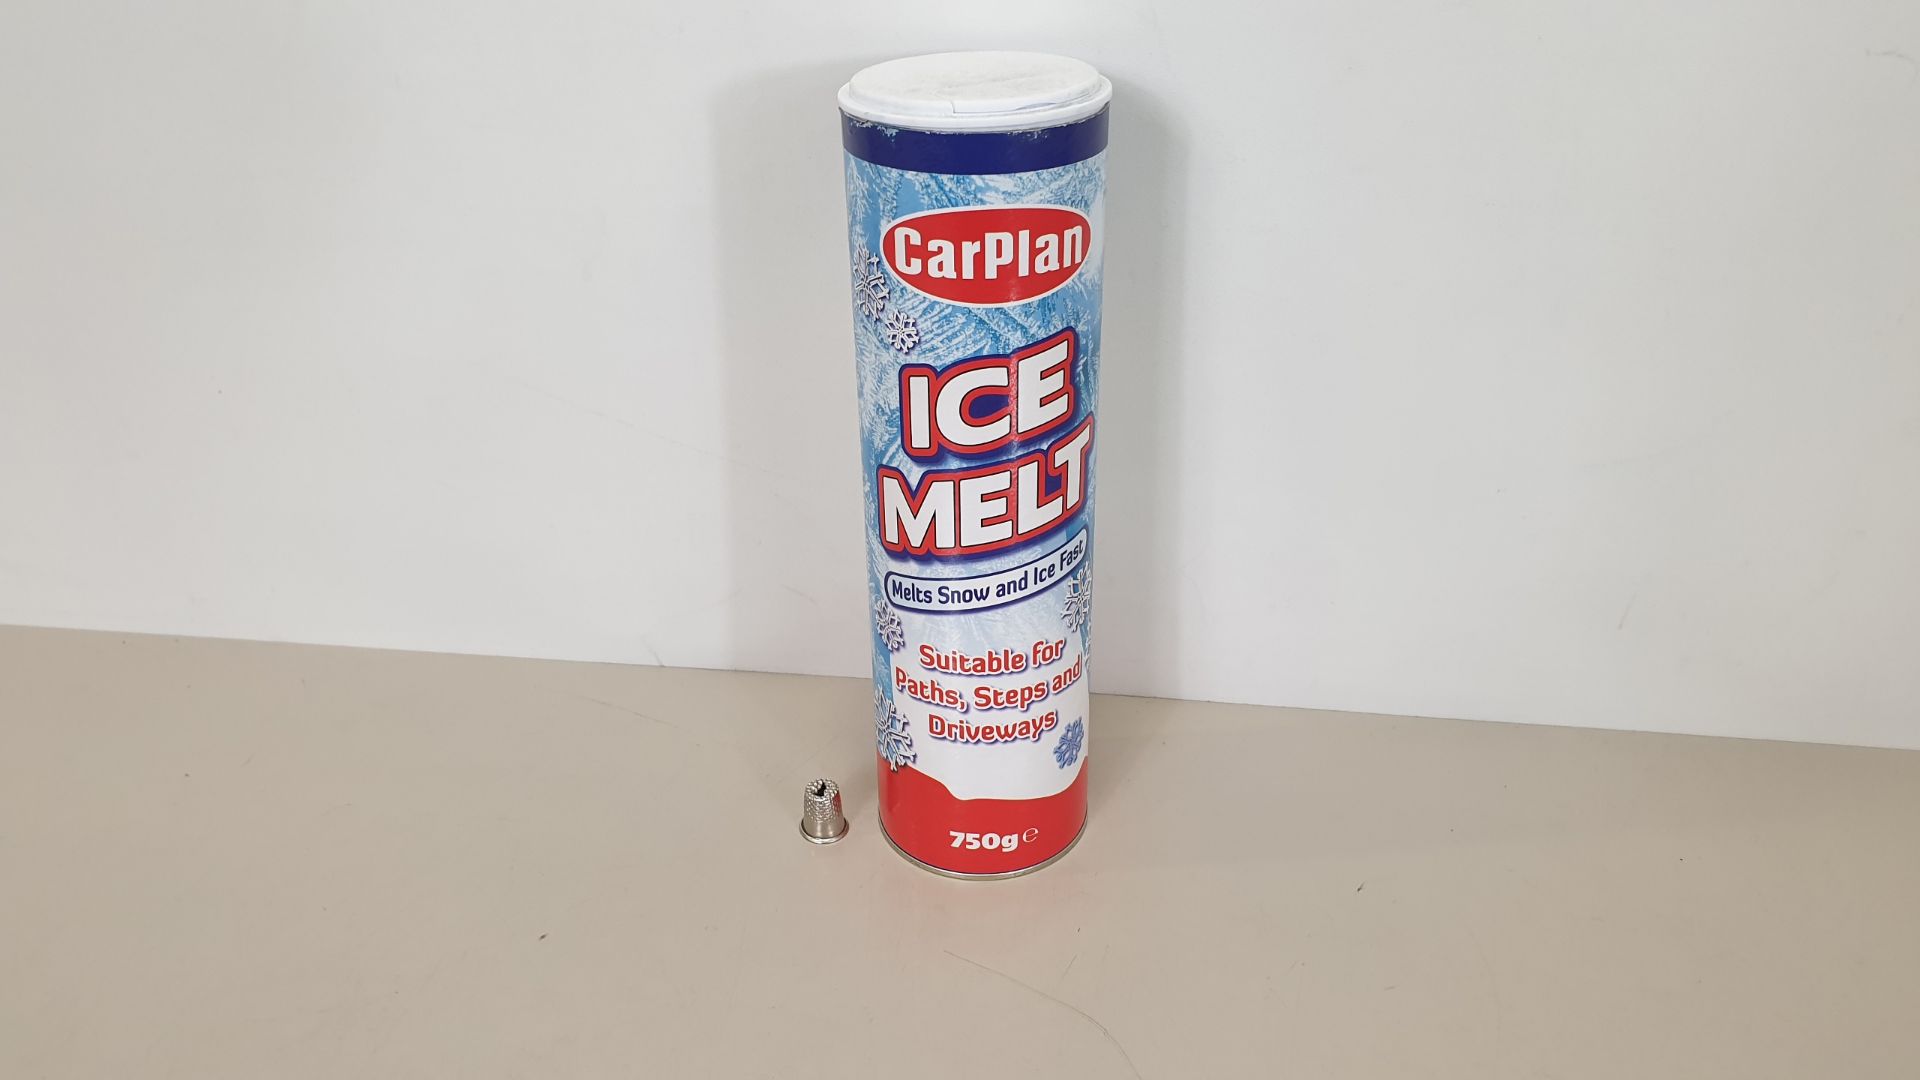 60 X CARPLAN ICE MELT TUBES 750G - IN 10 CARTONS